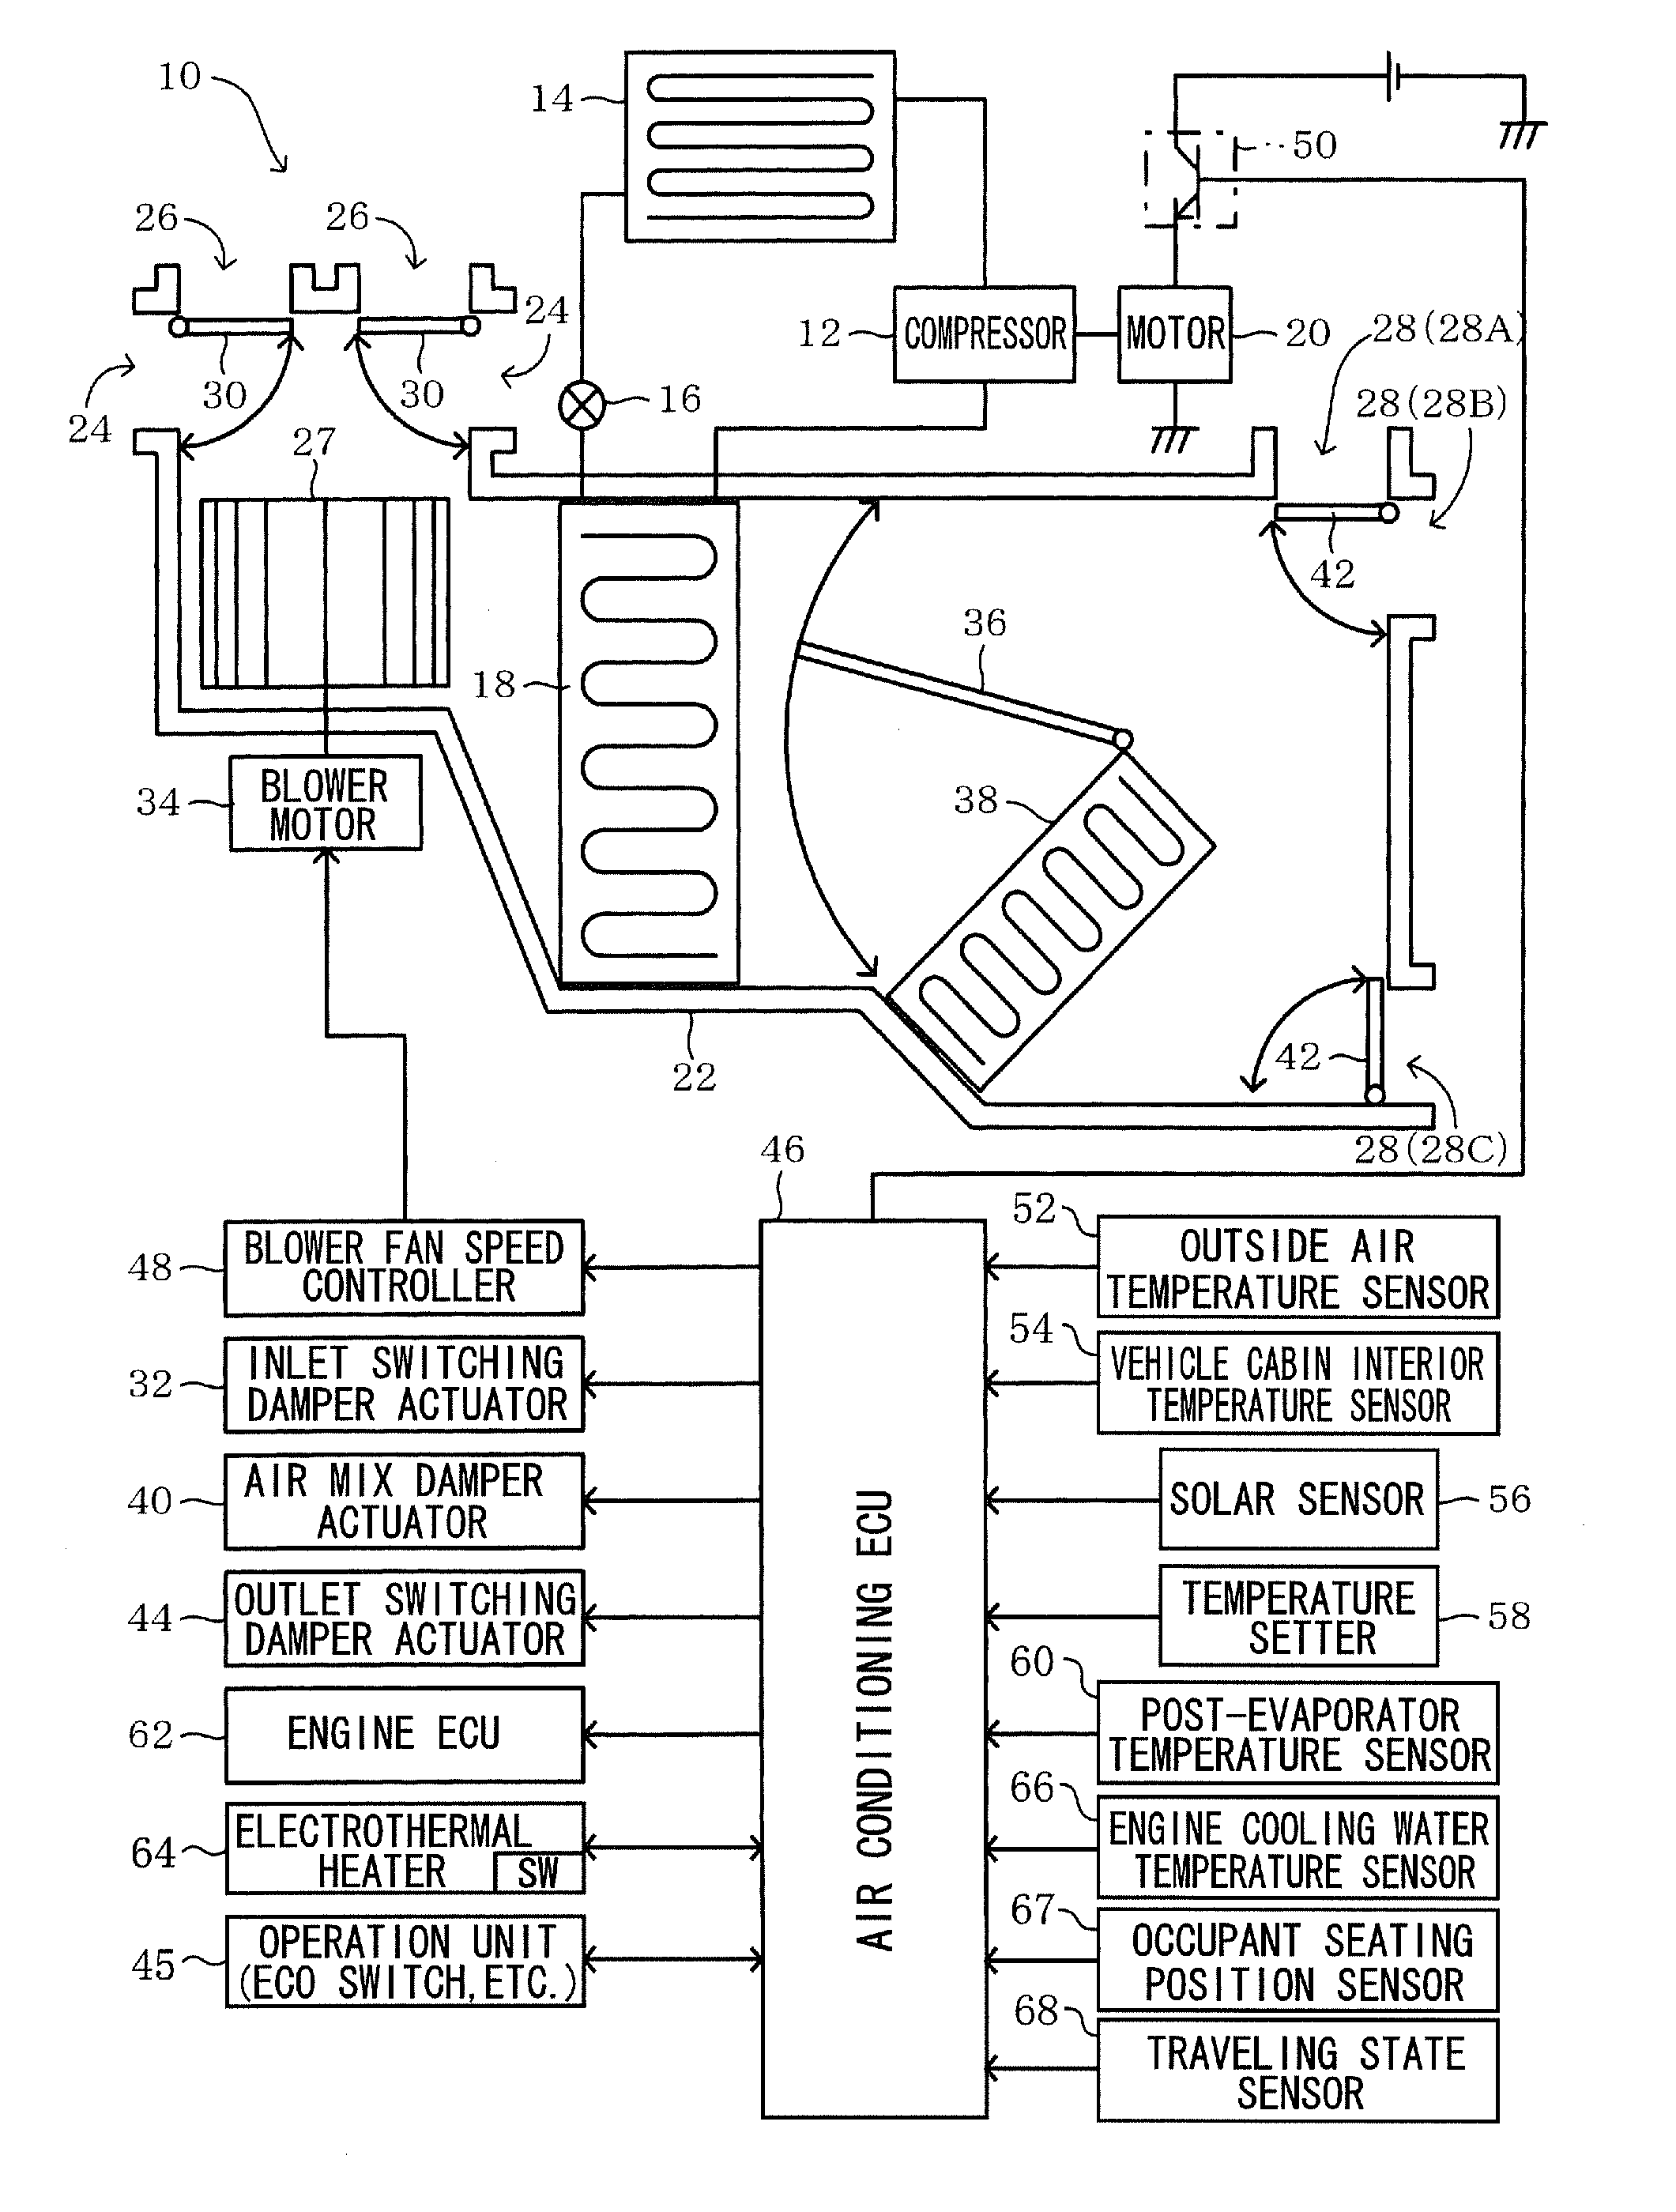 Vehicular heating control system, method, and computer-readable storage medium